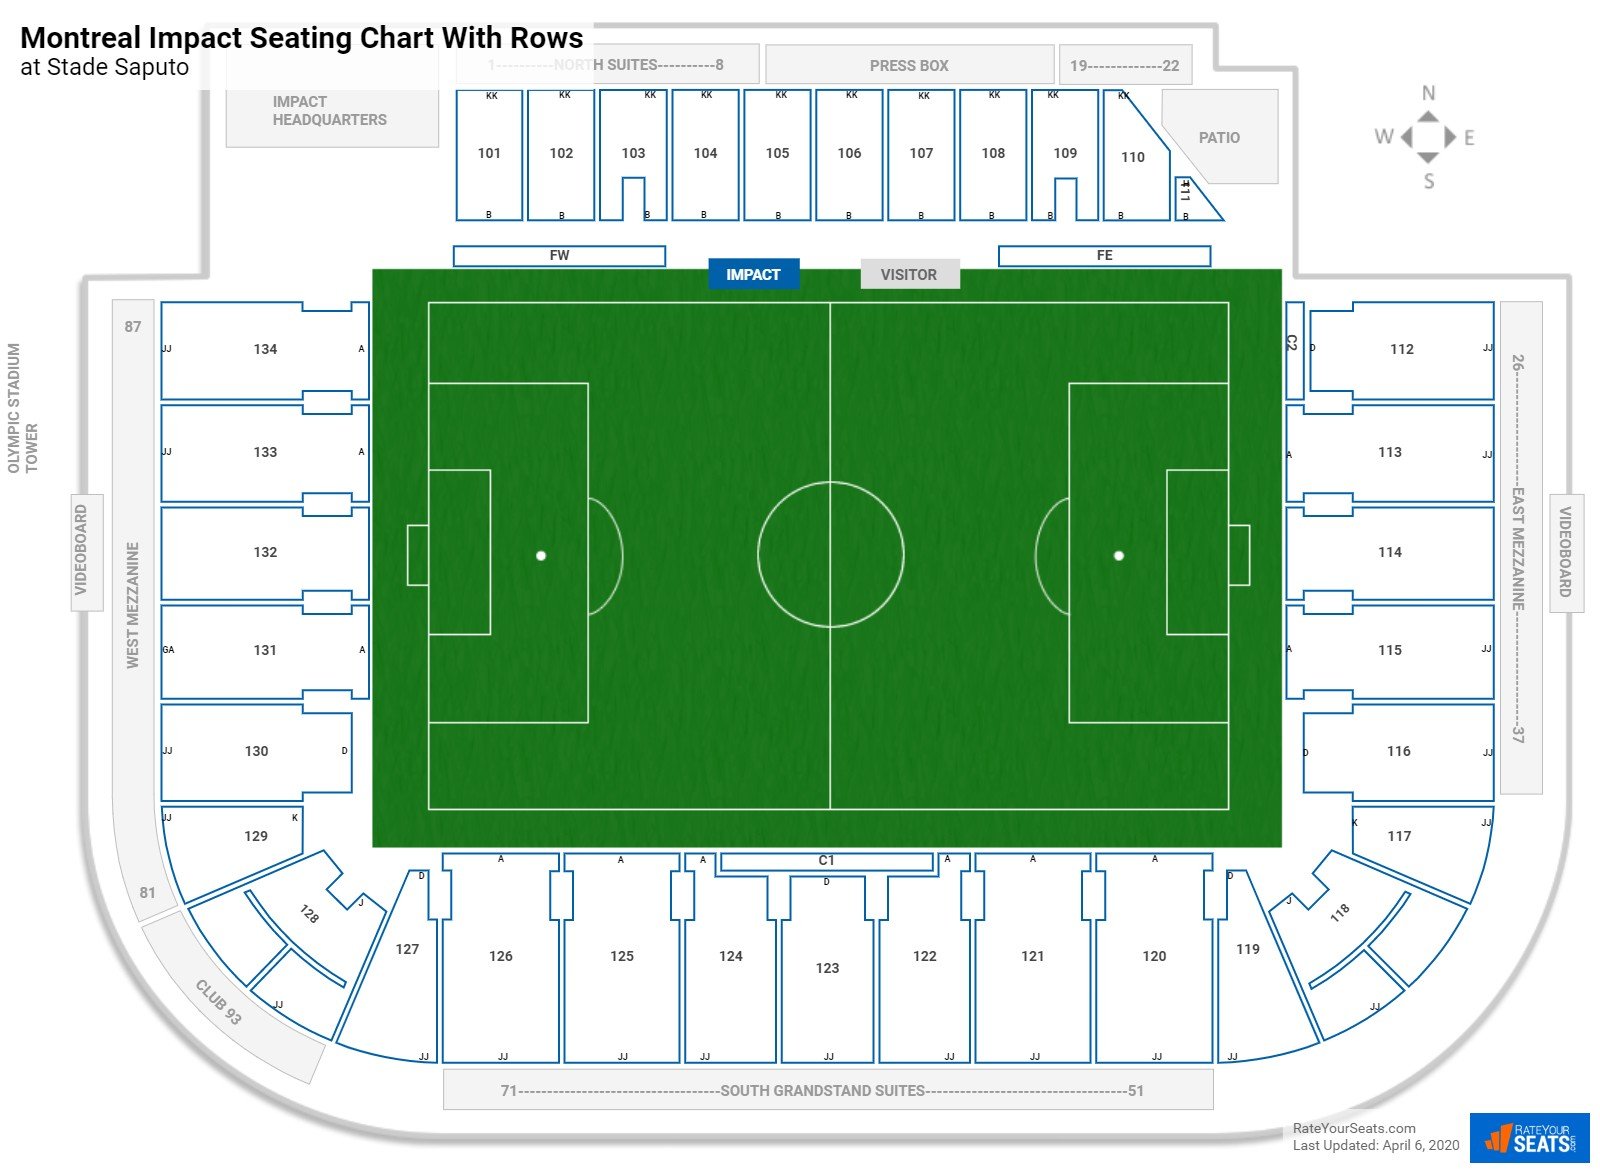 Stade Saputo seating chart with row numbers